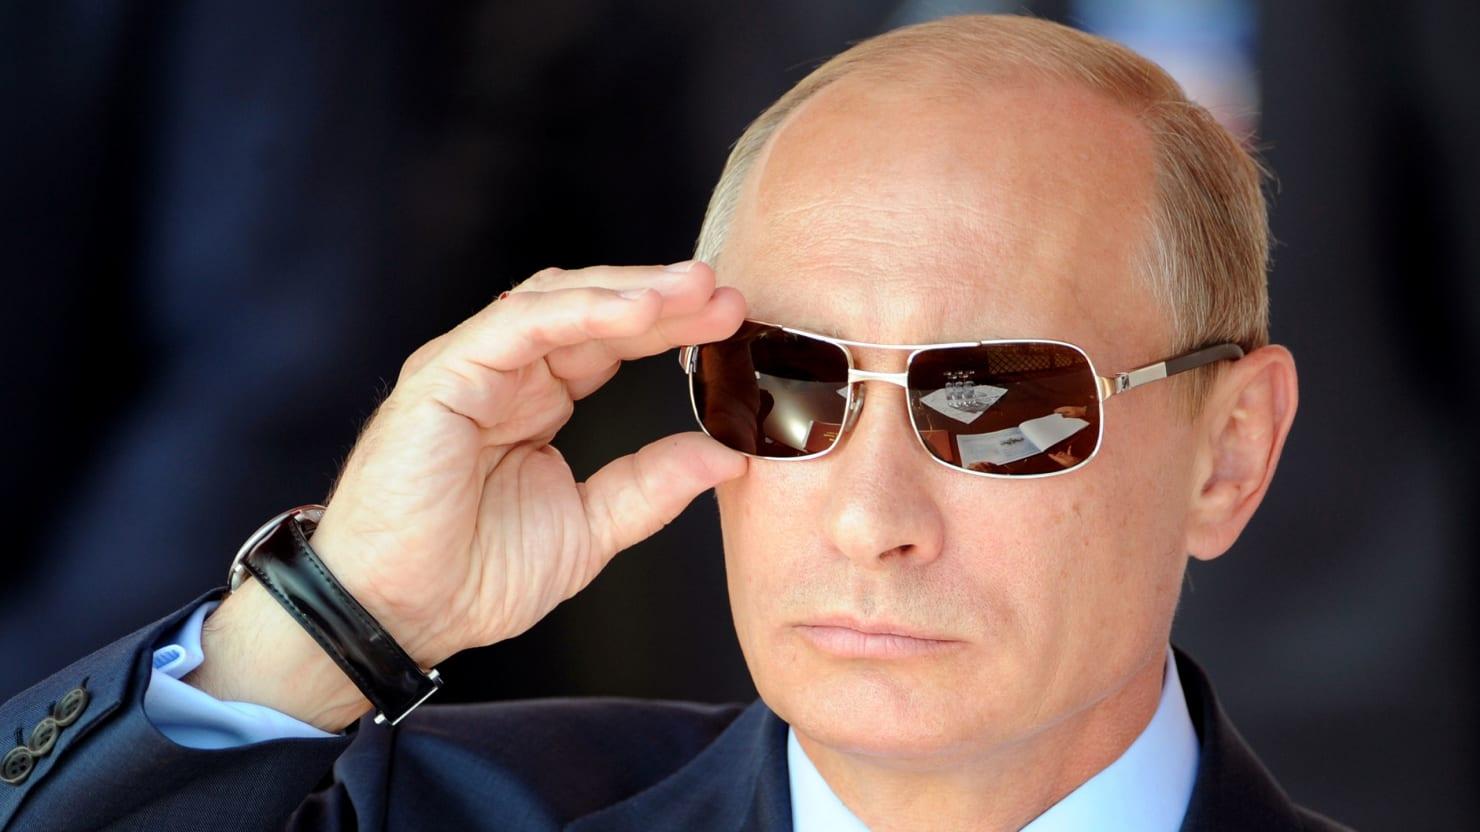 Putin: Izenadna posjeta - Avaz